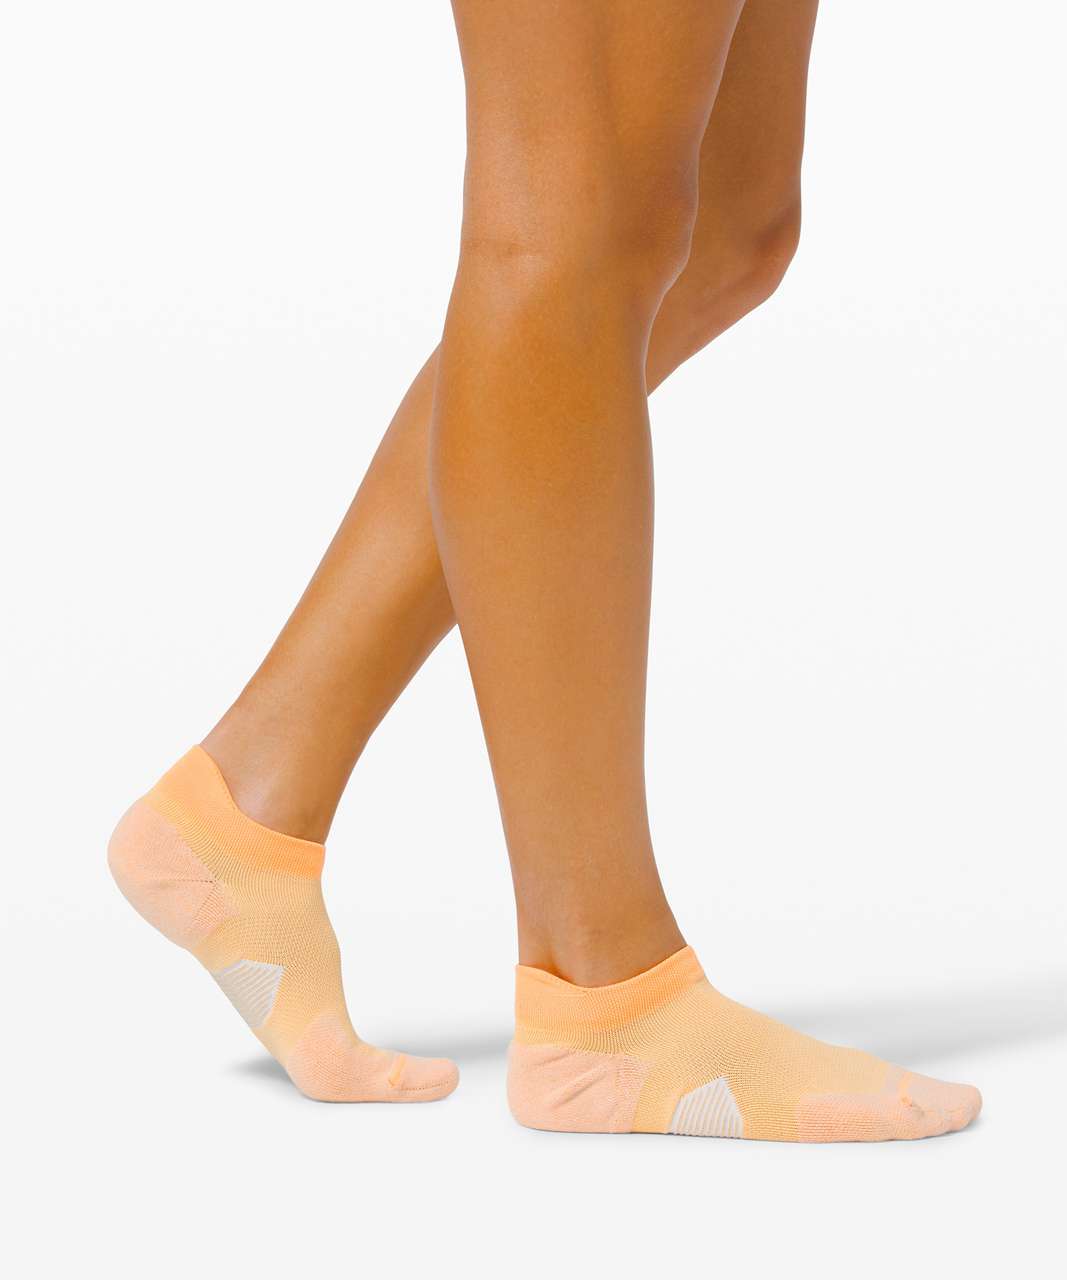 Lululemon Speed Sock (Silver) *SeaWheeze - Florid Orange / White